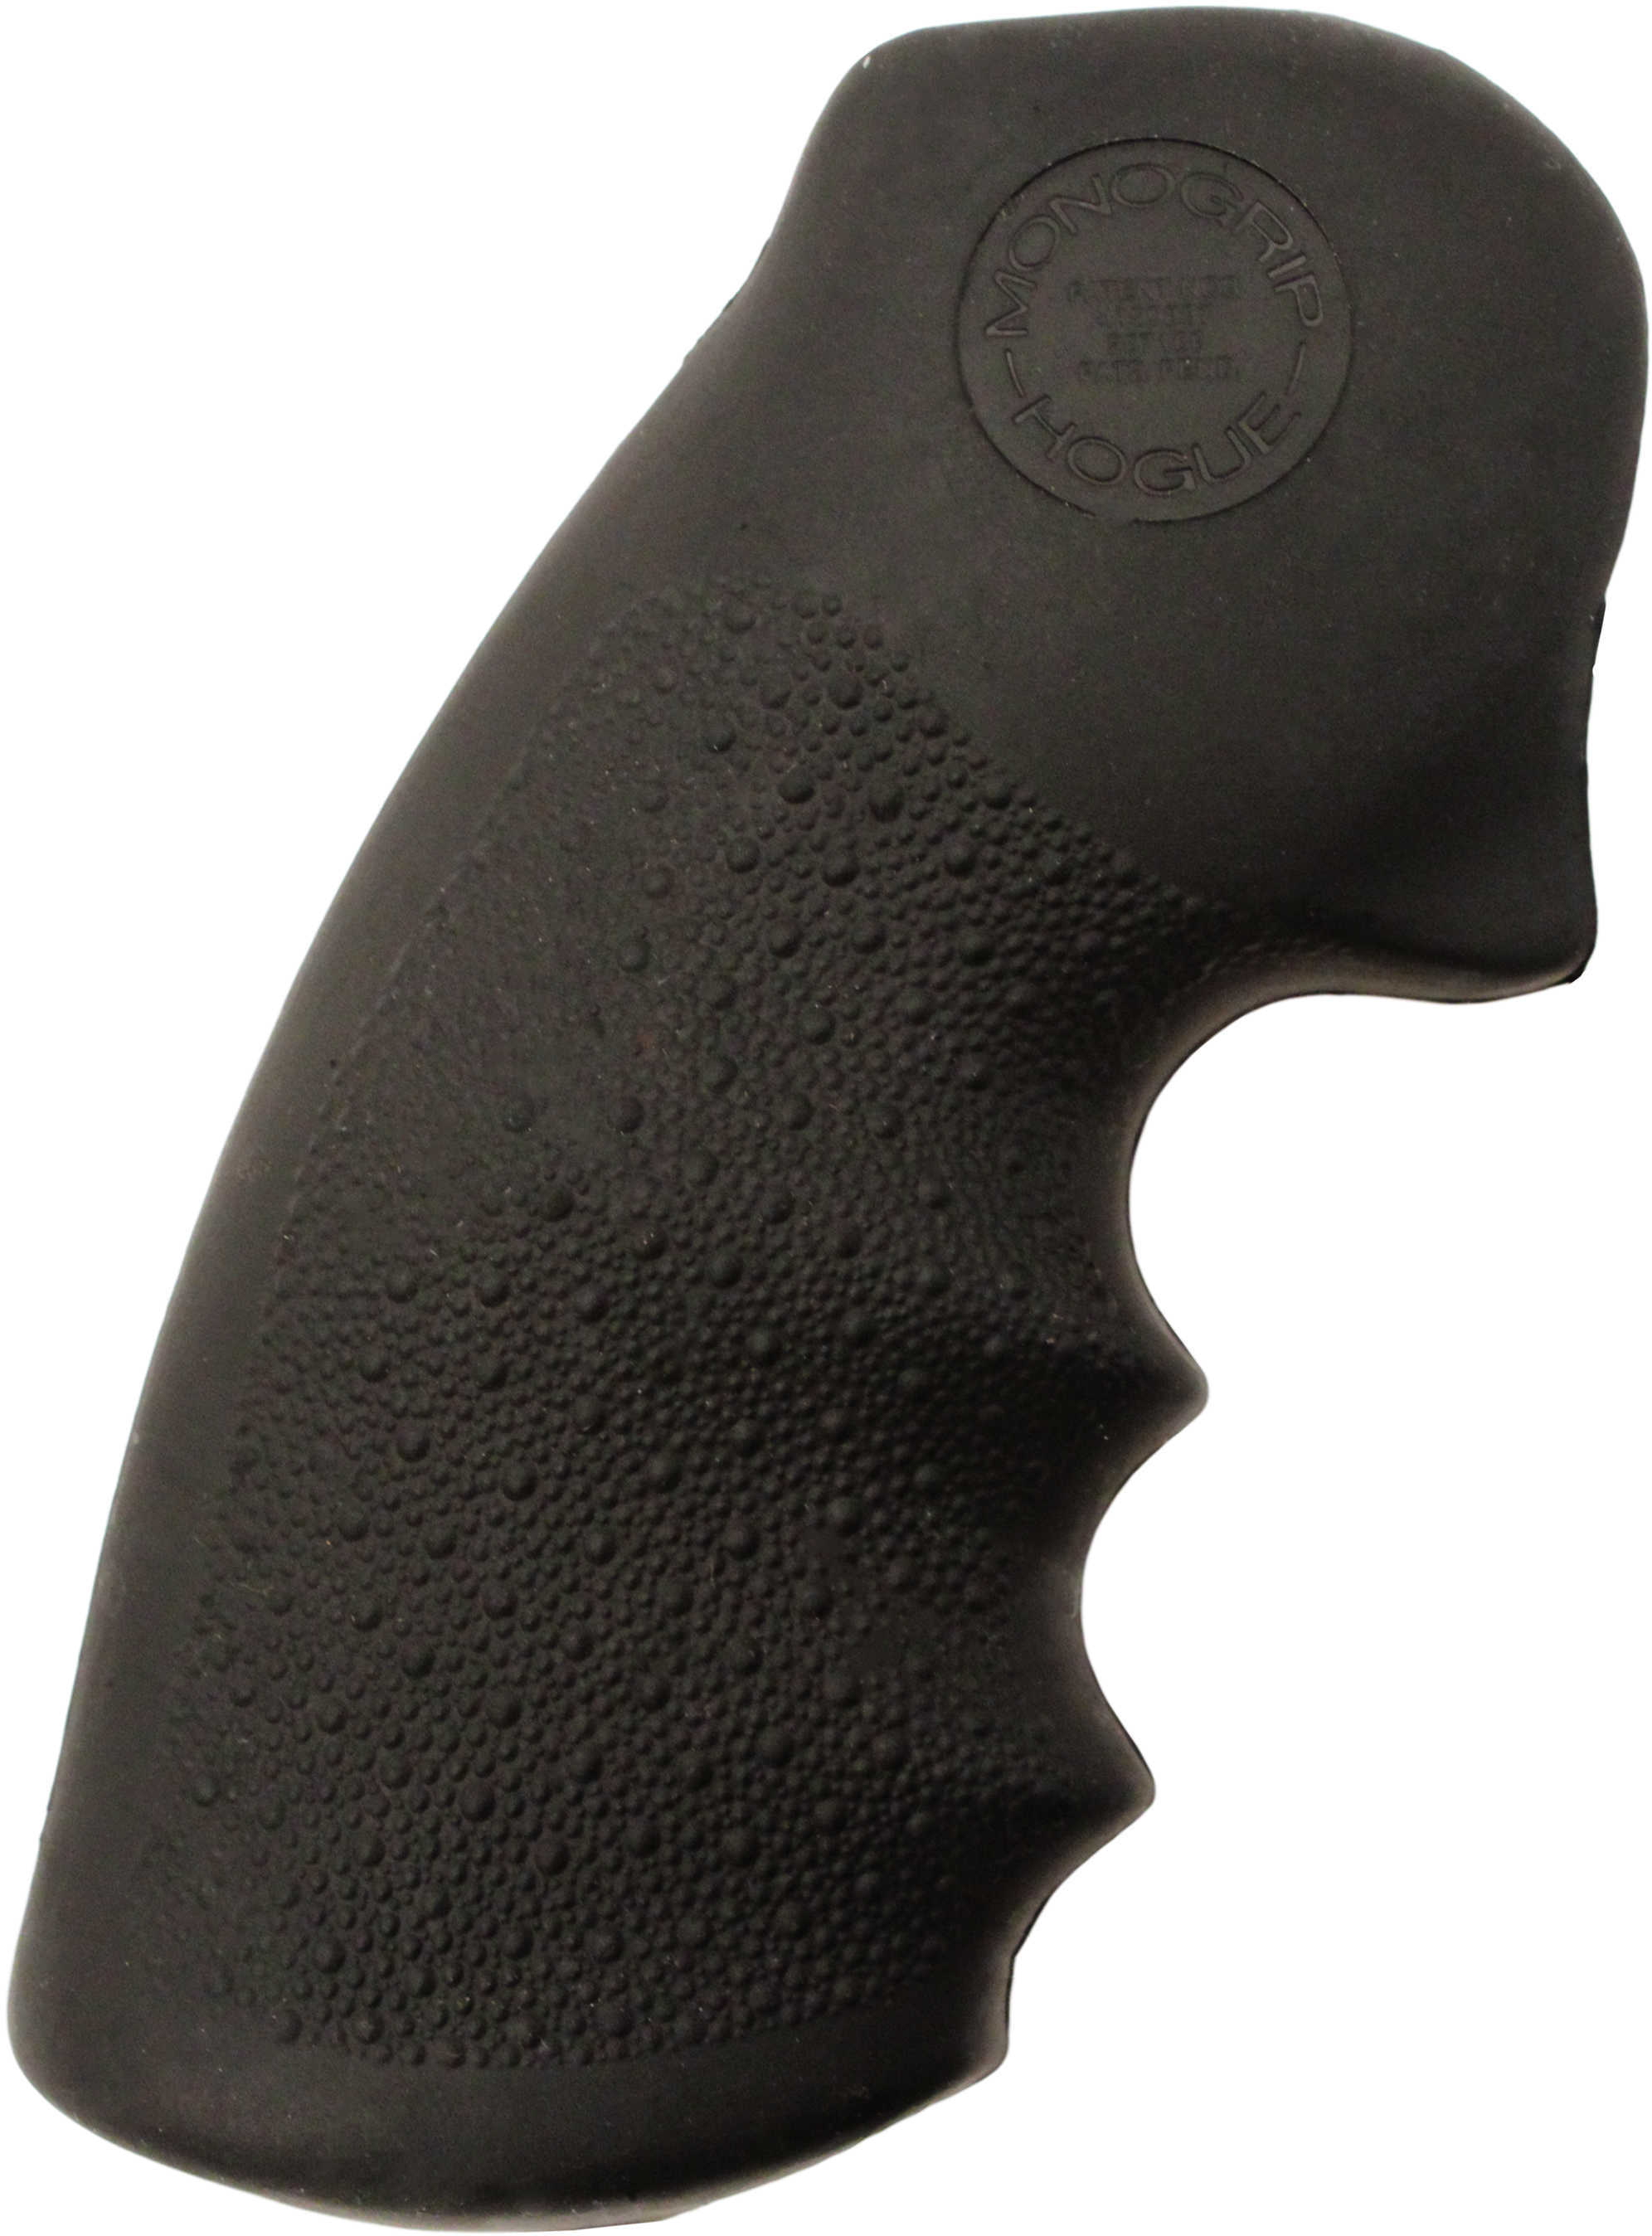 Hogue Grips Monogrip Colt Python Finger Groove Rubber Black 46000